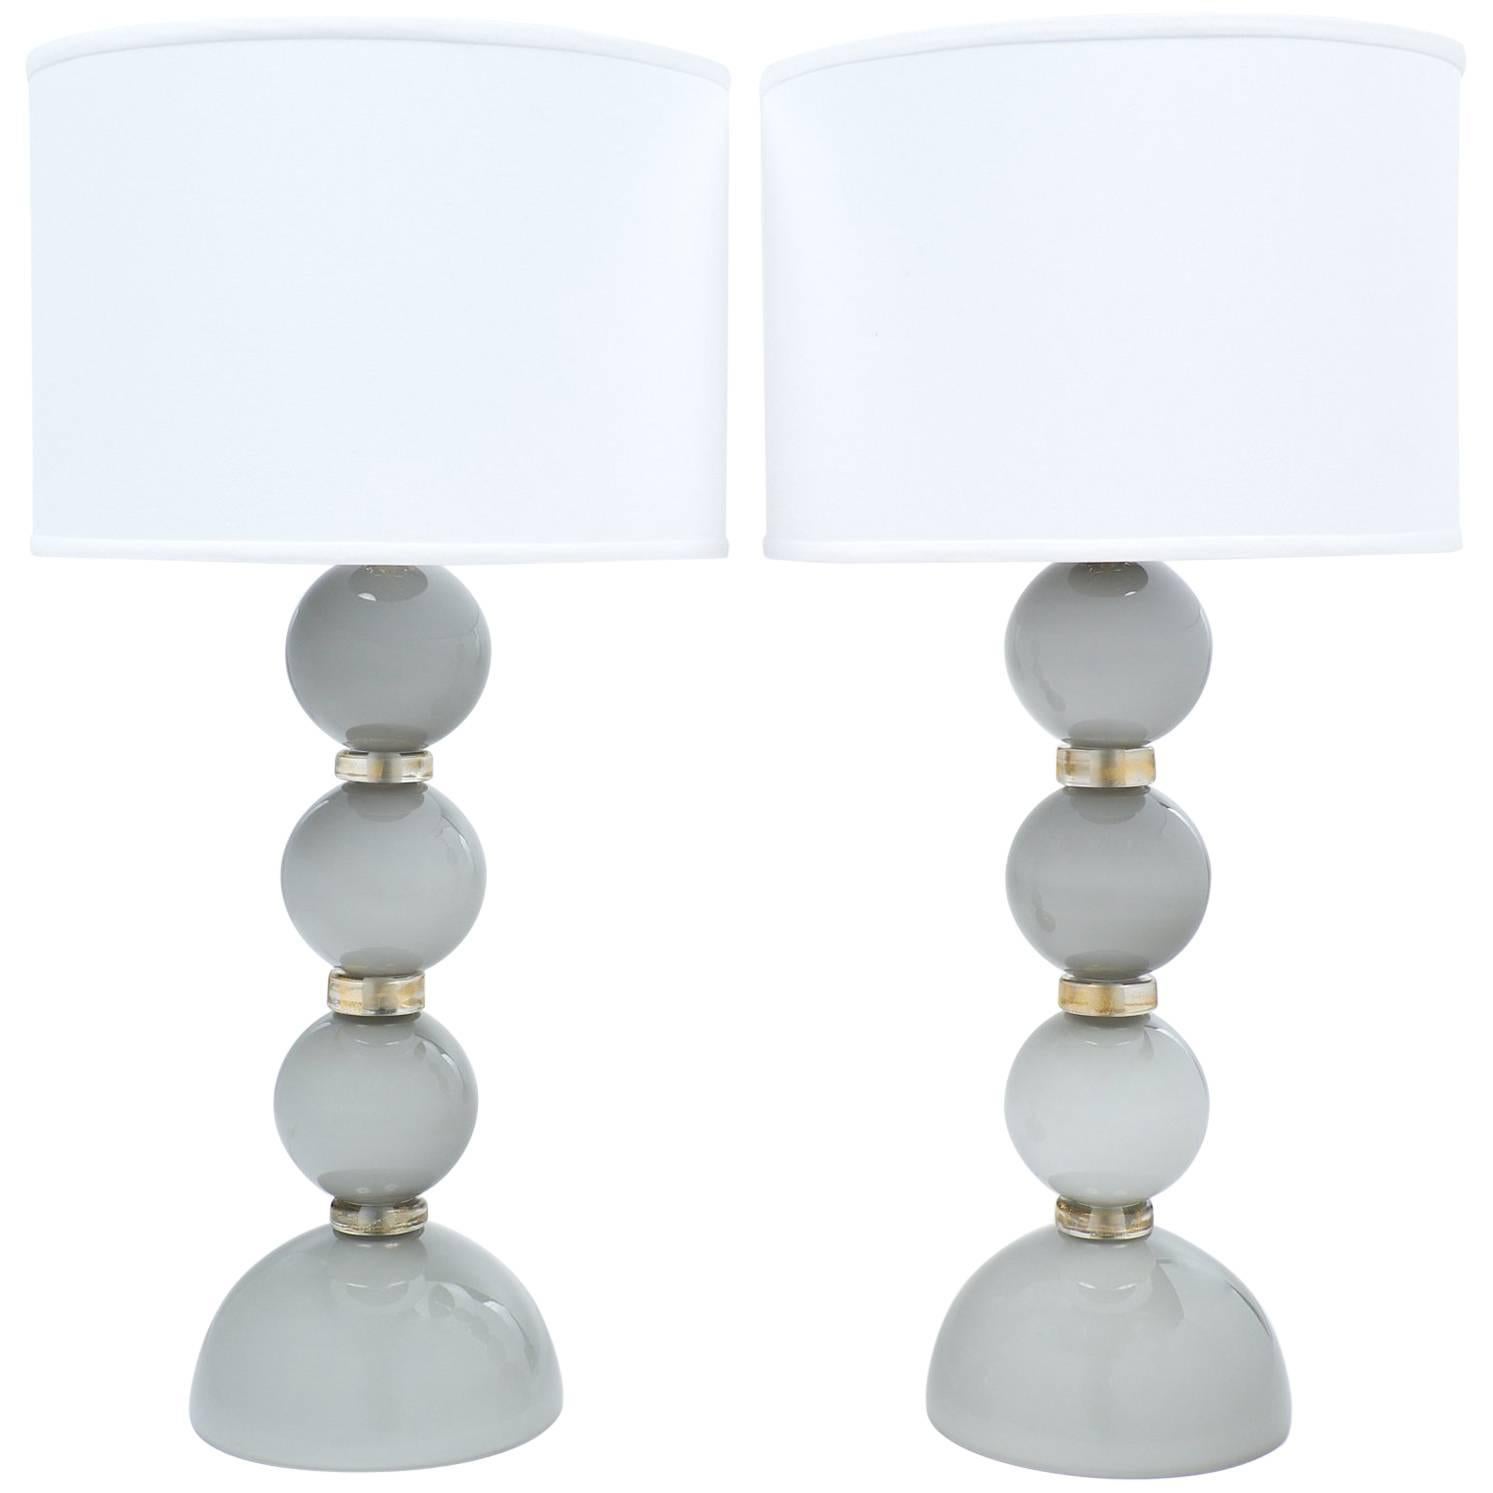 Pair of Gray "Incamiciato" Murano Glass Table Lamps